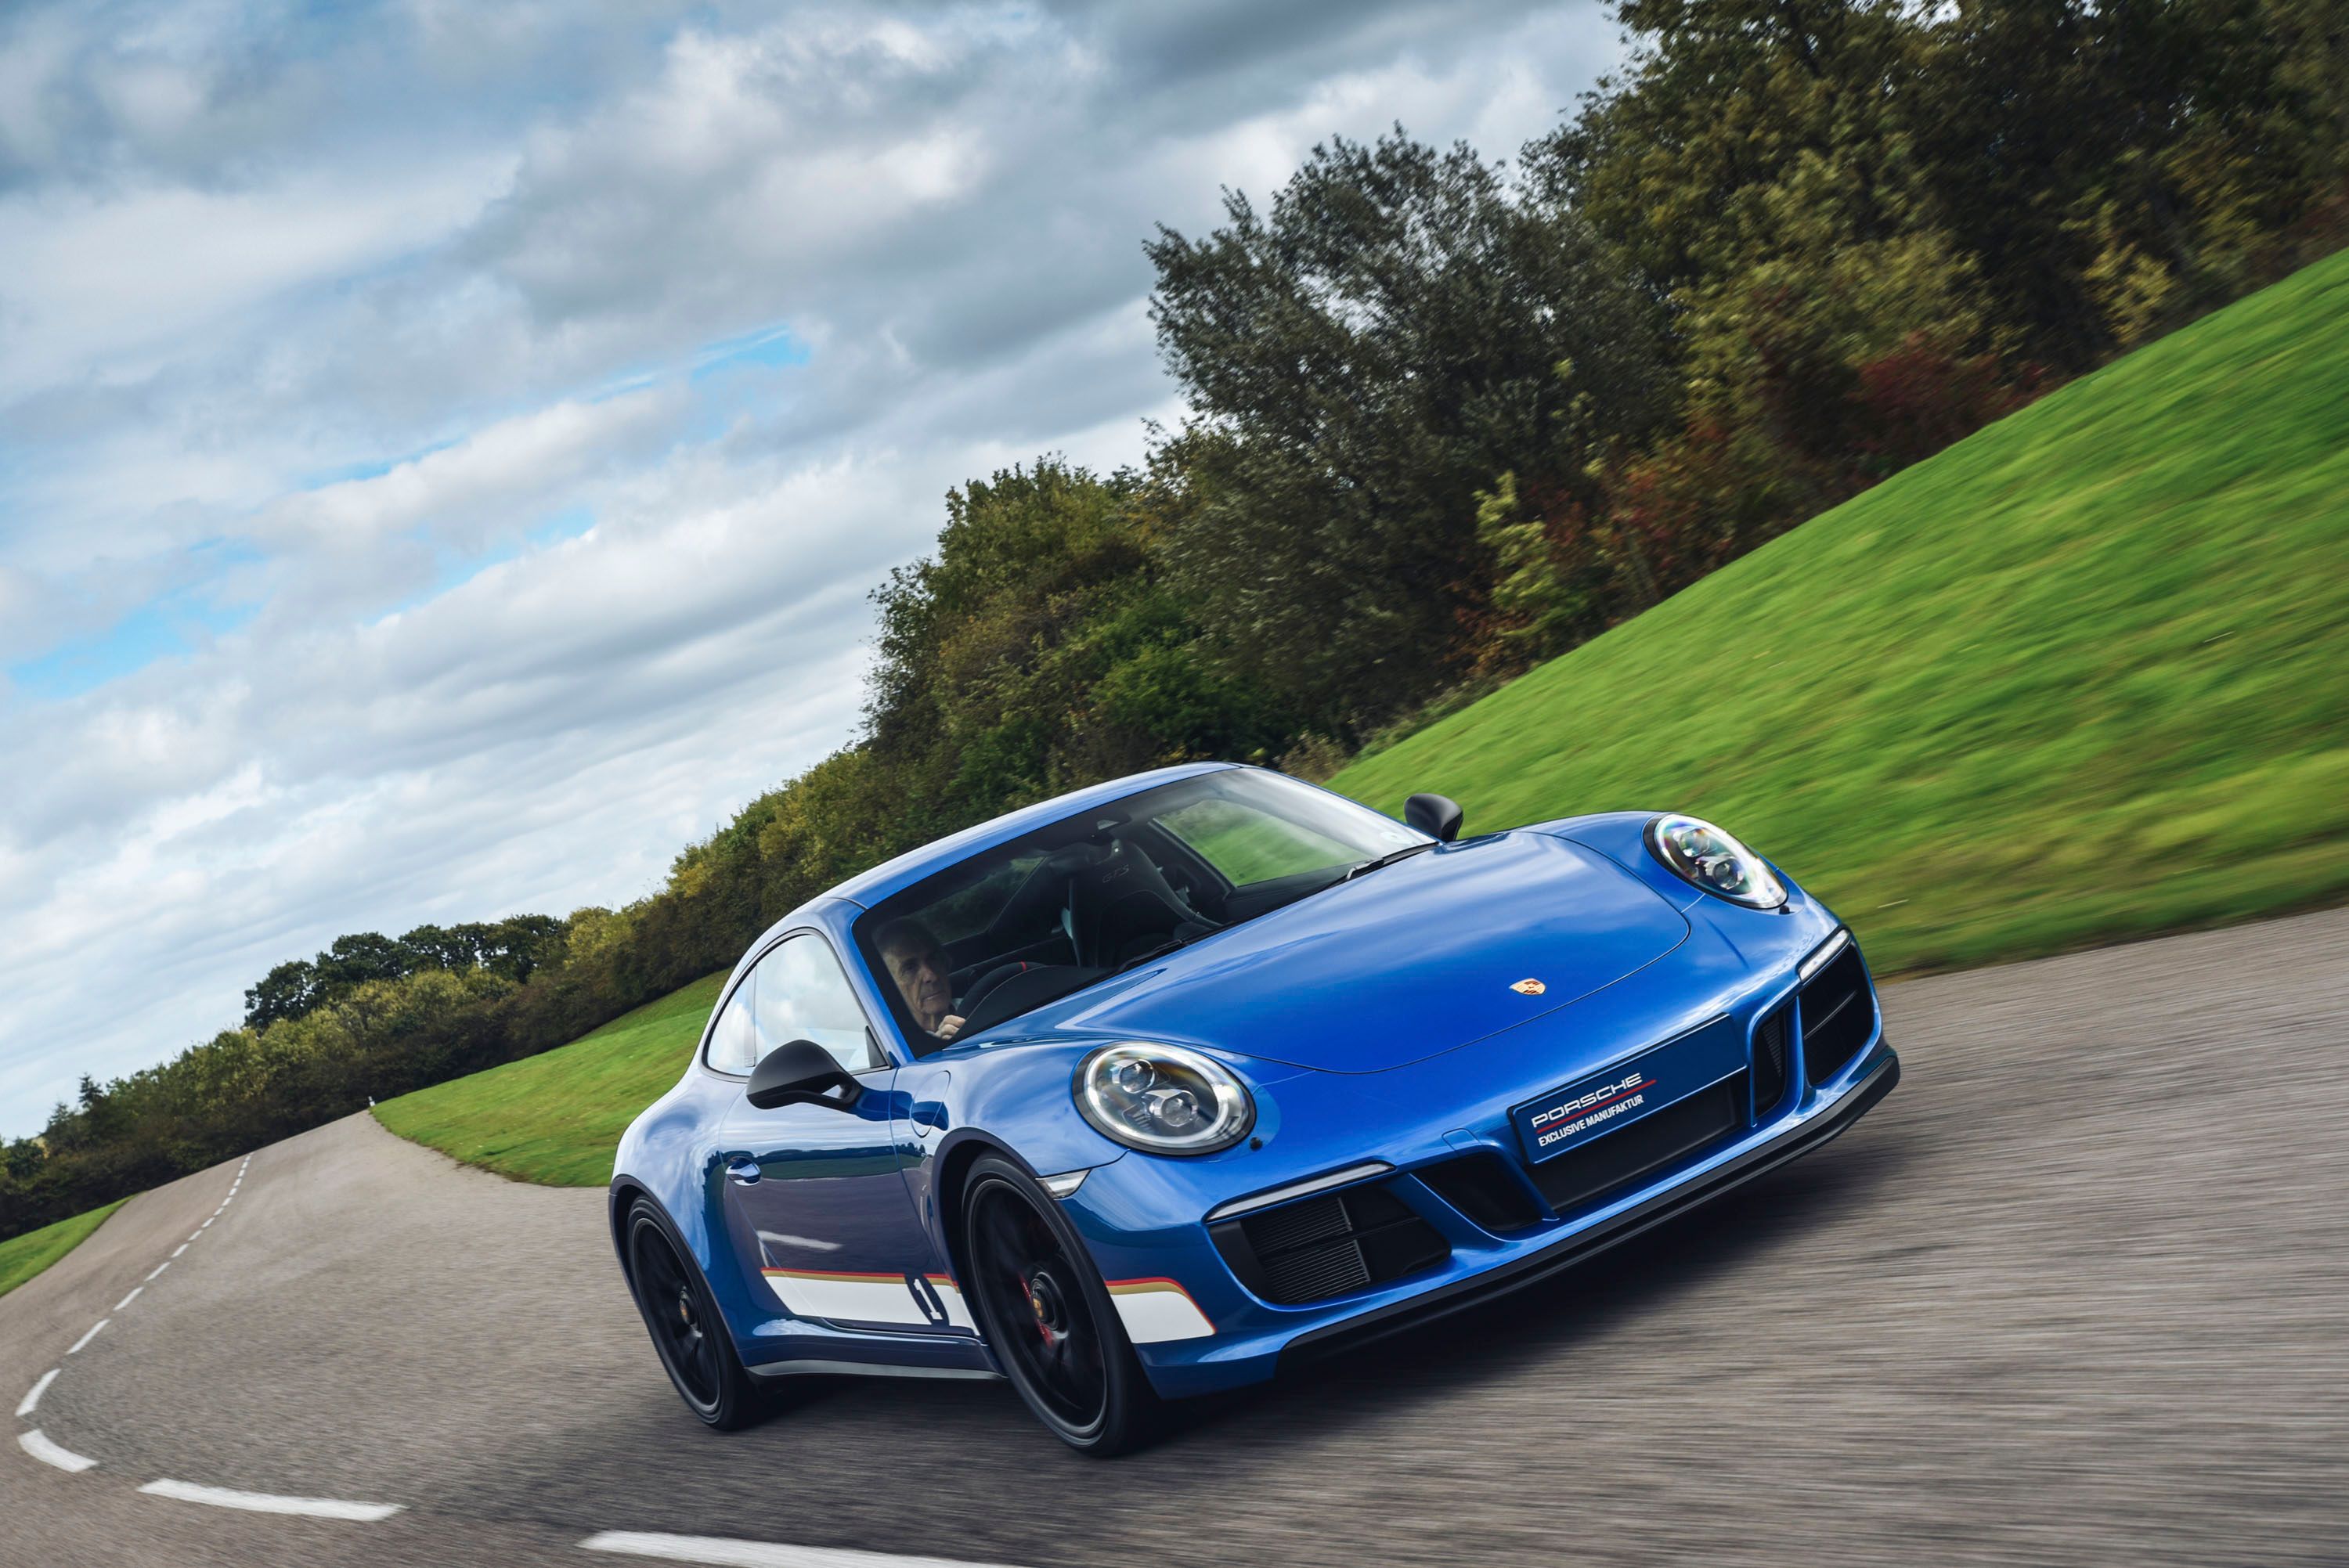 Porsche 911 Carrera 4 GTS British Legends Edition - Sapphire Blue